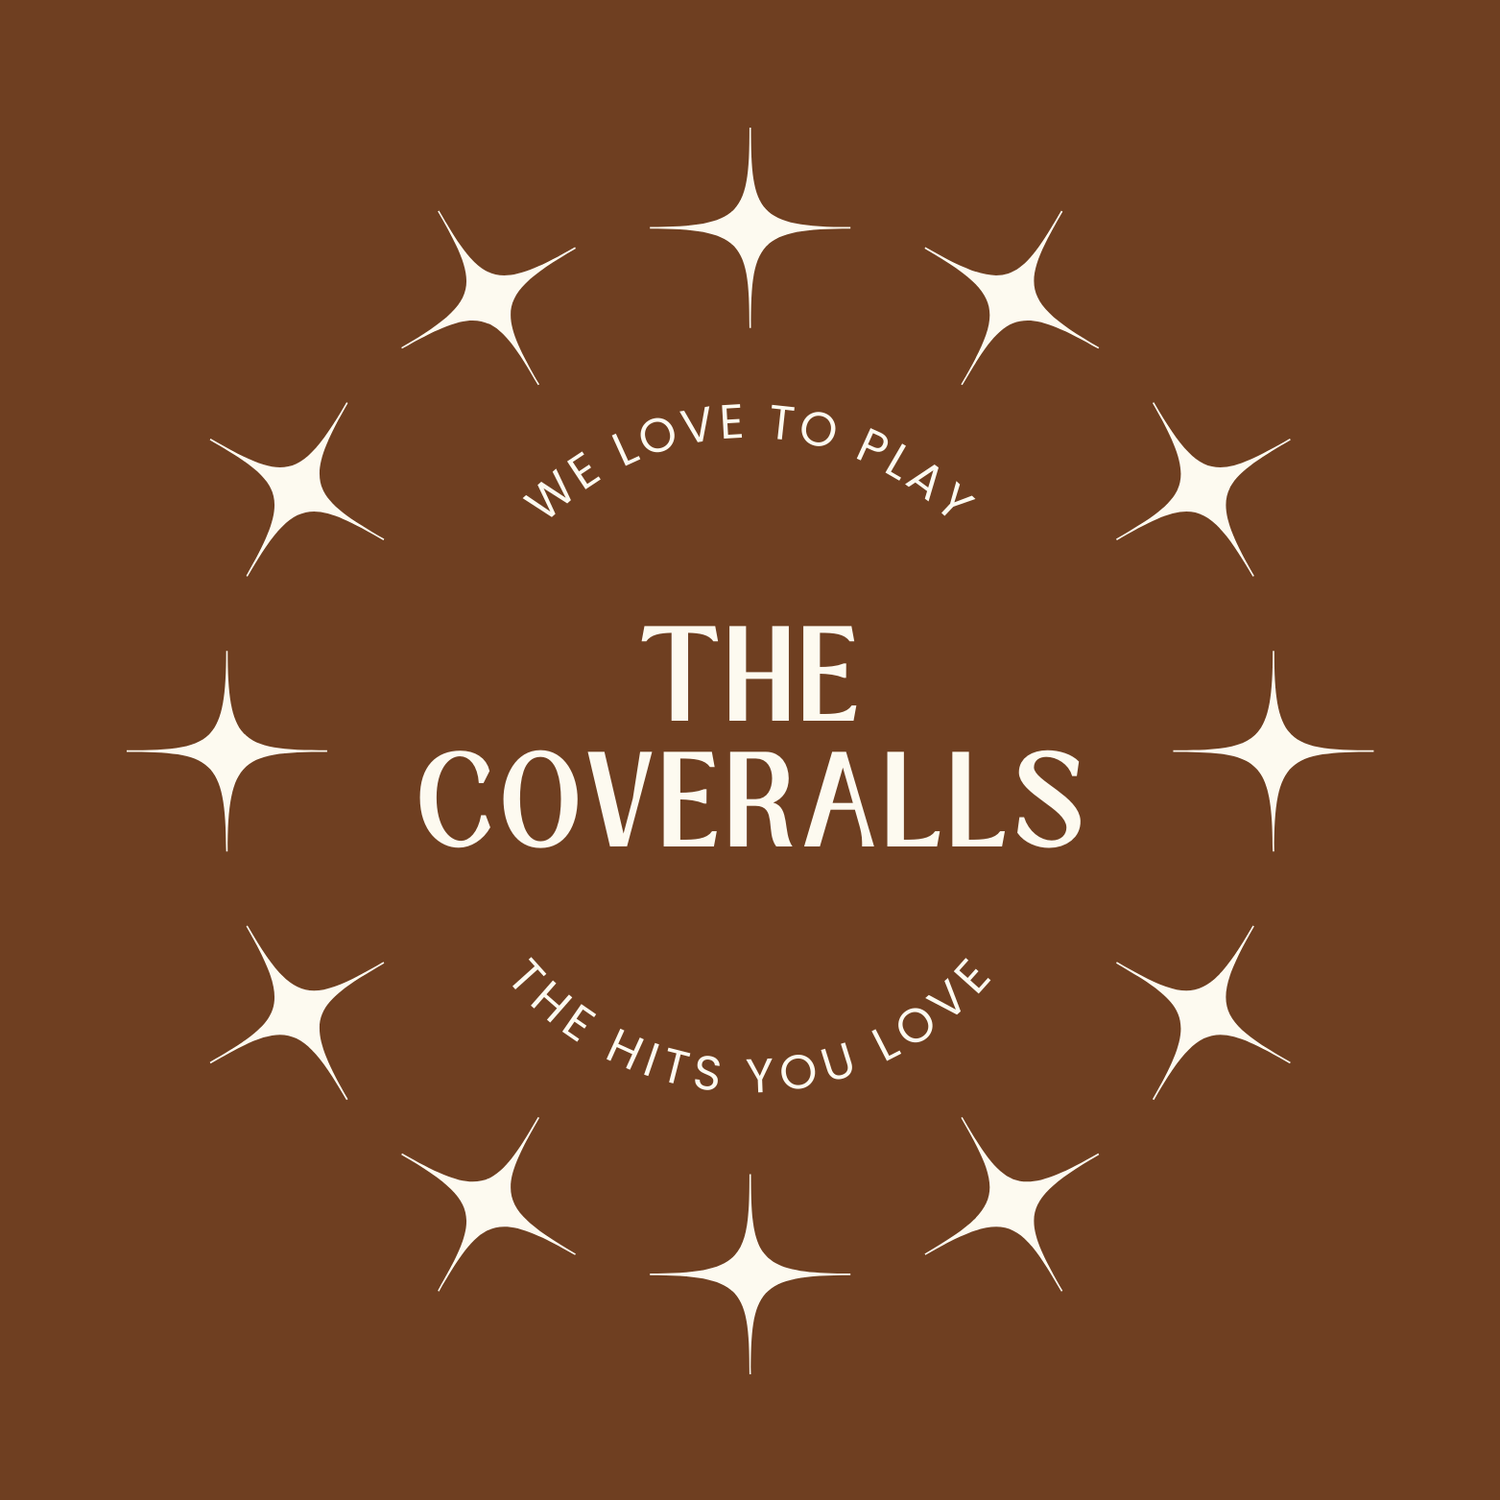 The Coveralls